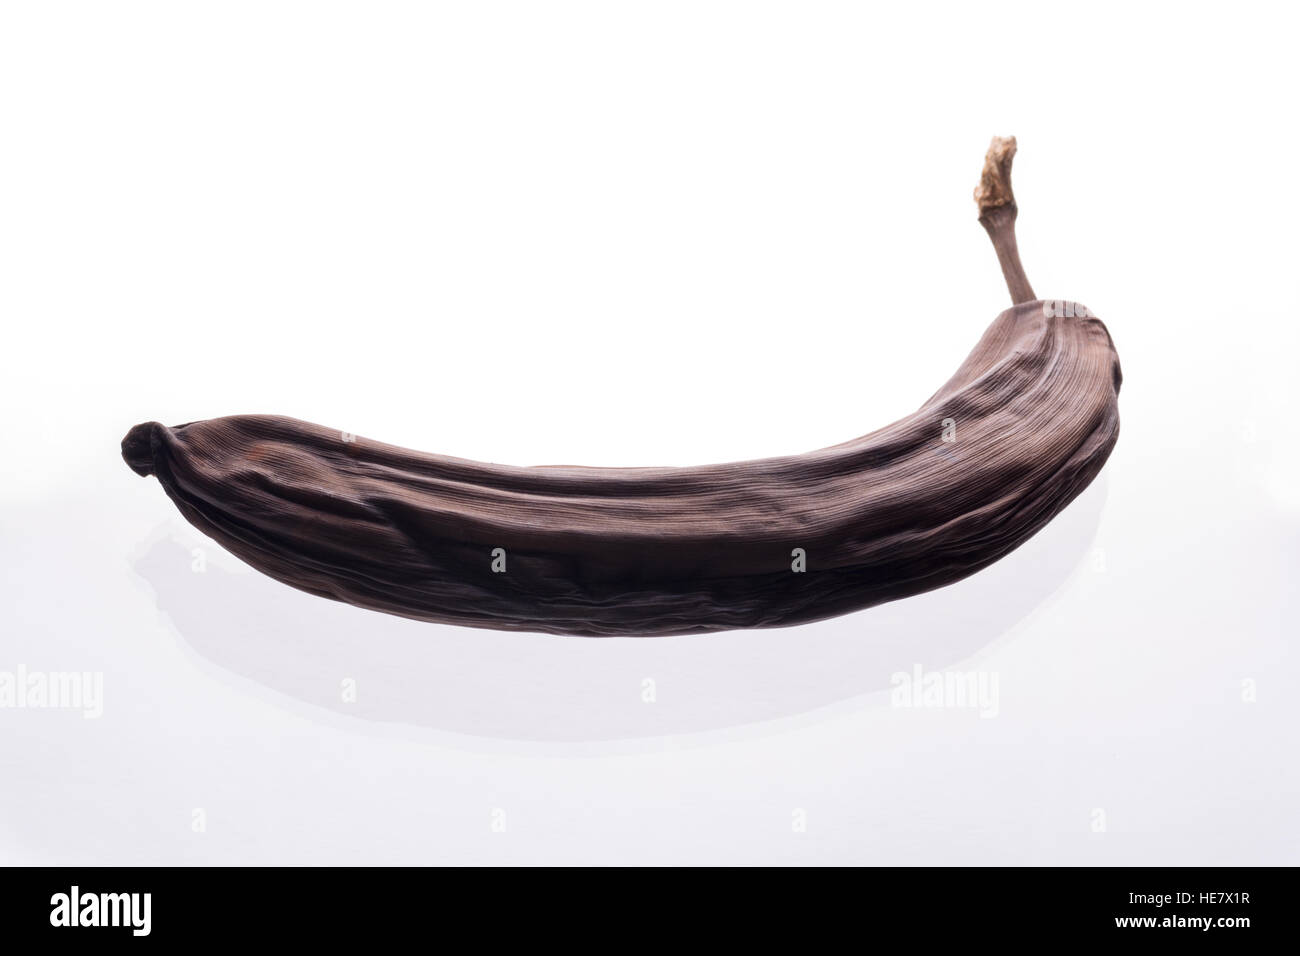 Spoiled brown banana lying on white background Stock Photo